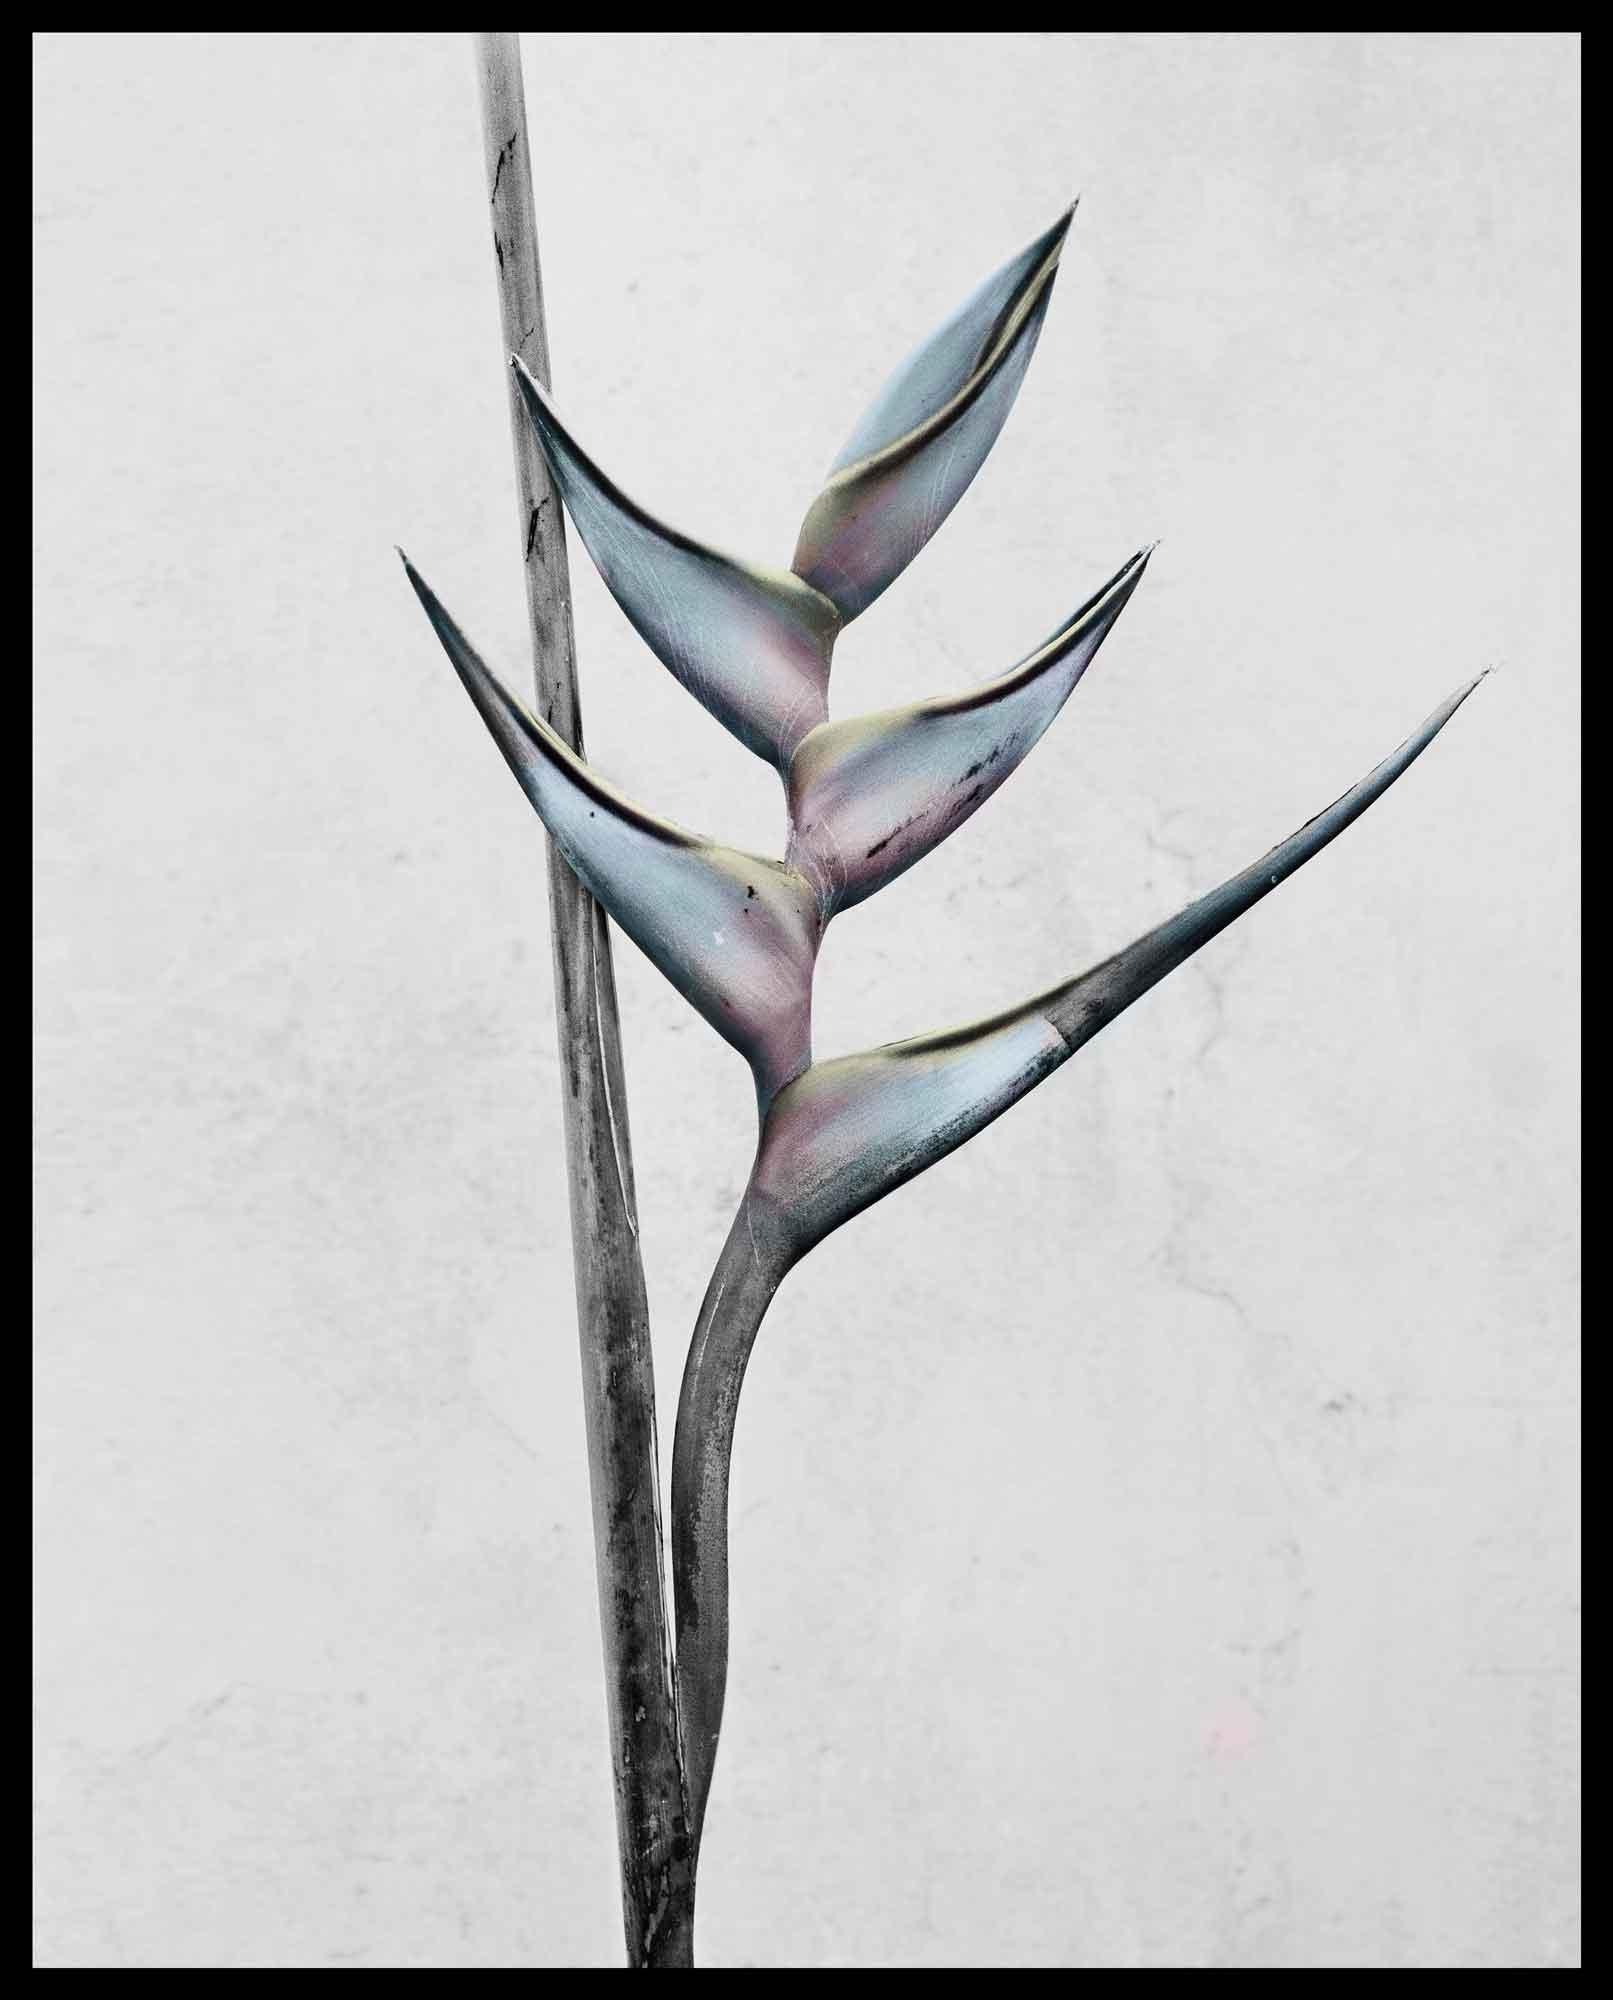 Botanica #13 (Heliconia Bihai) - Gray Color Photograph by Vee Speers